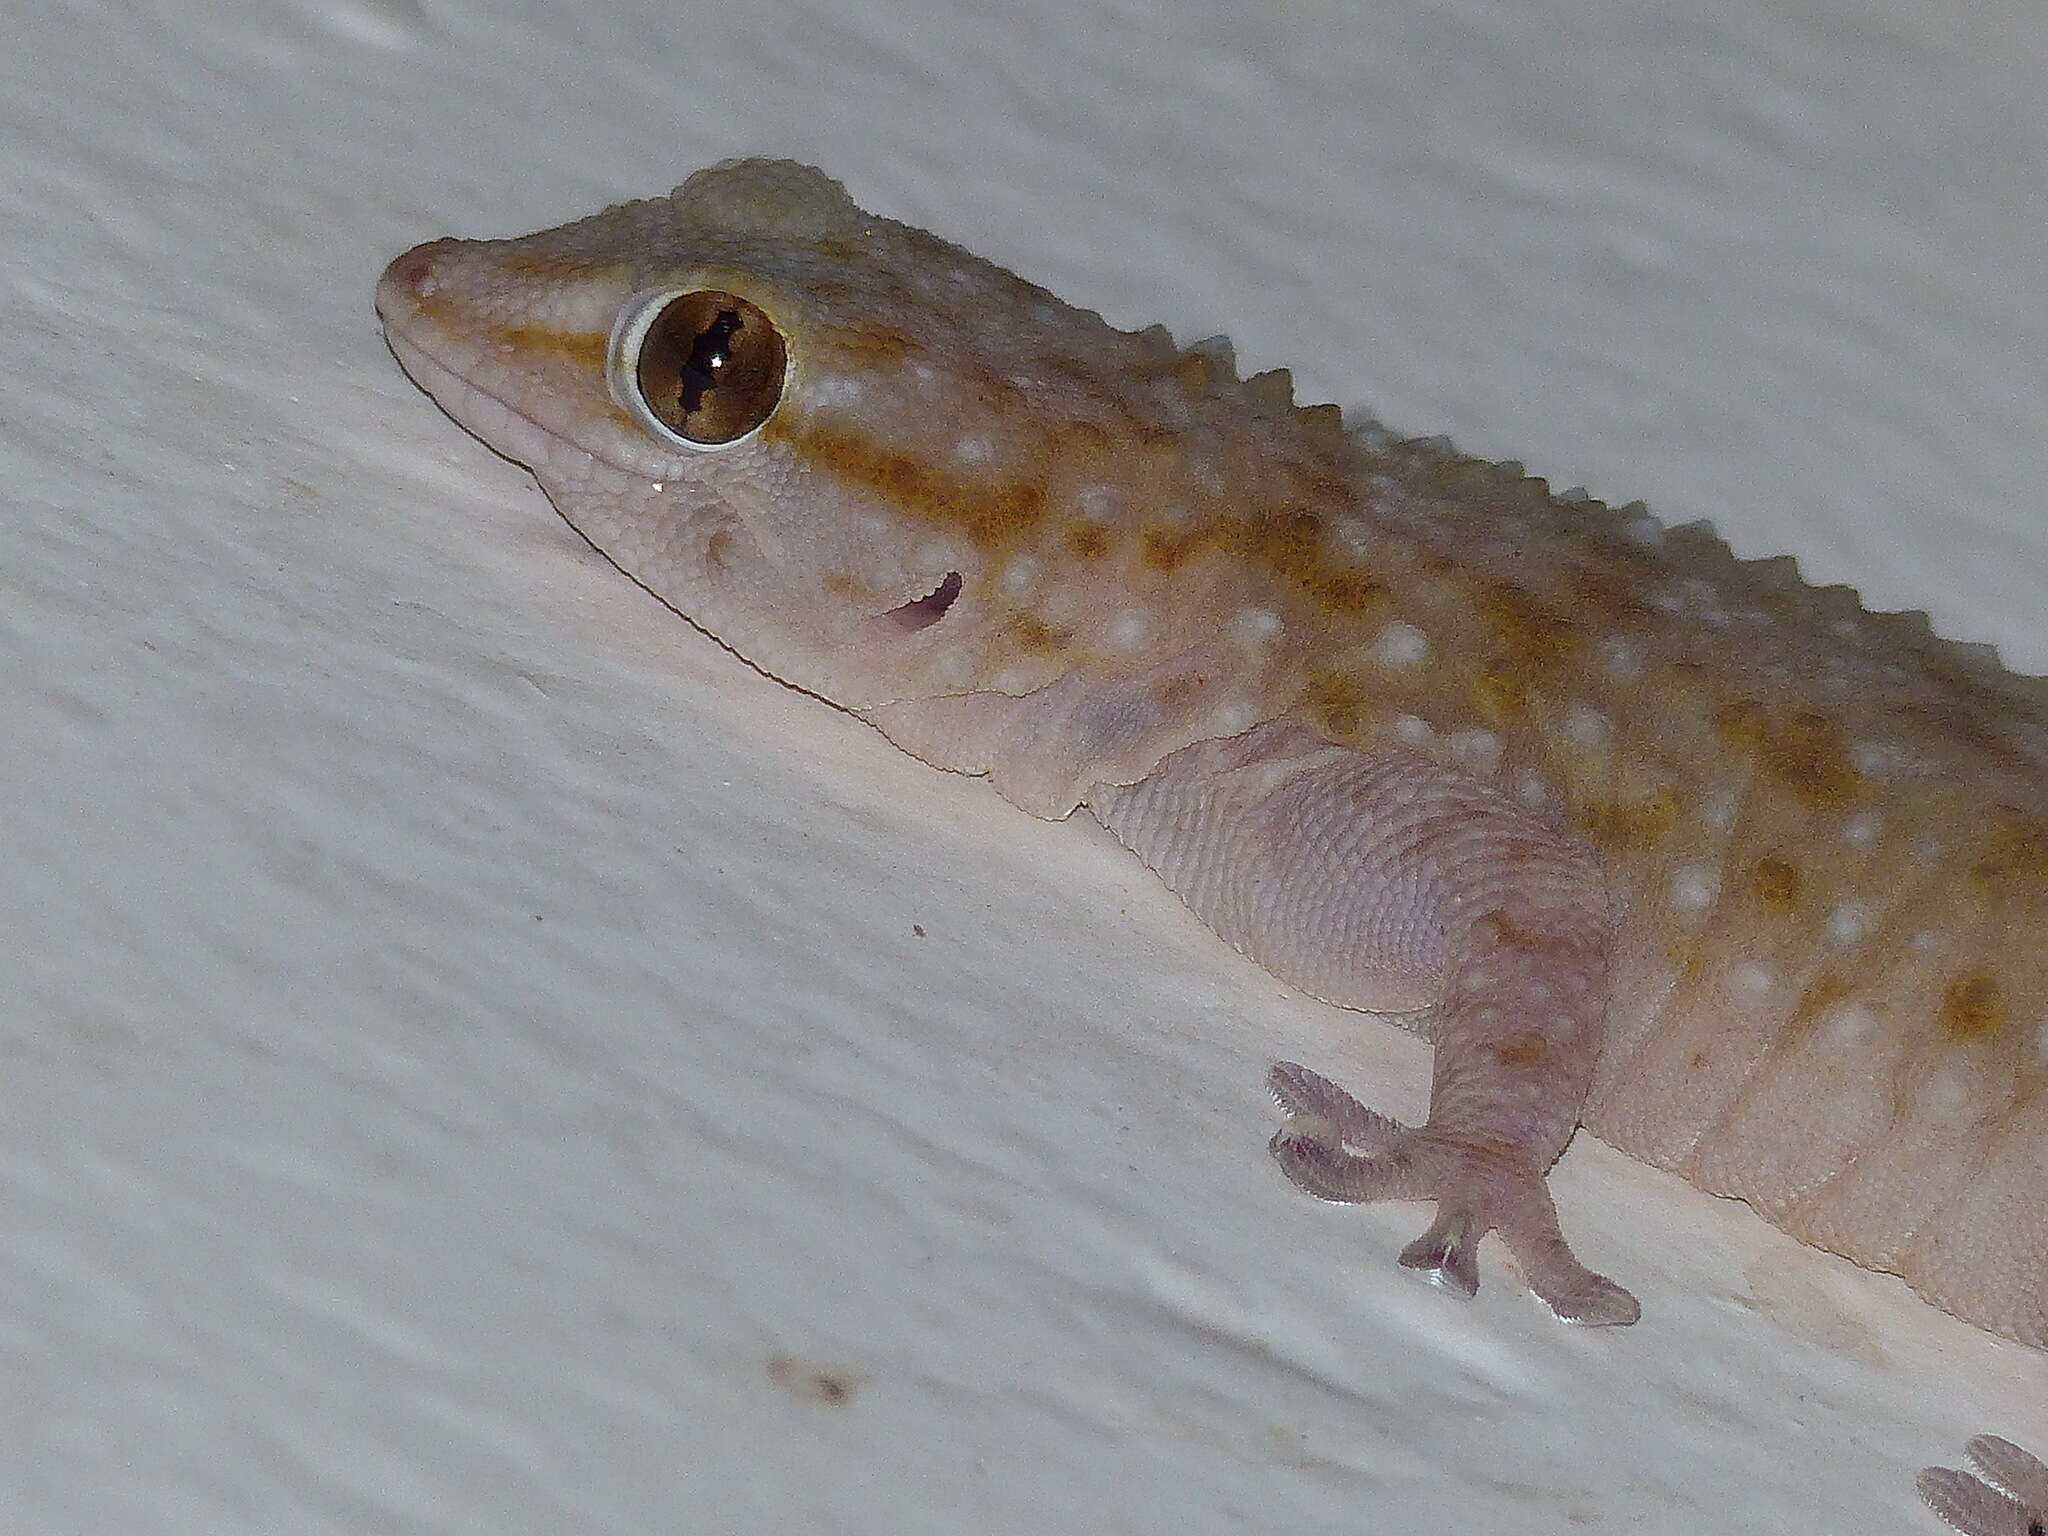 Image of Sierra Leone Wall Gecko